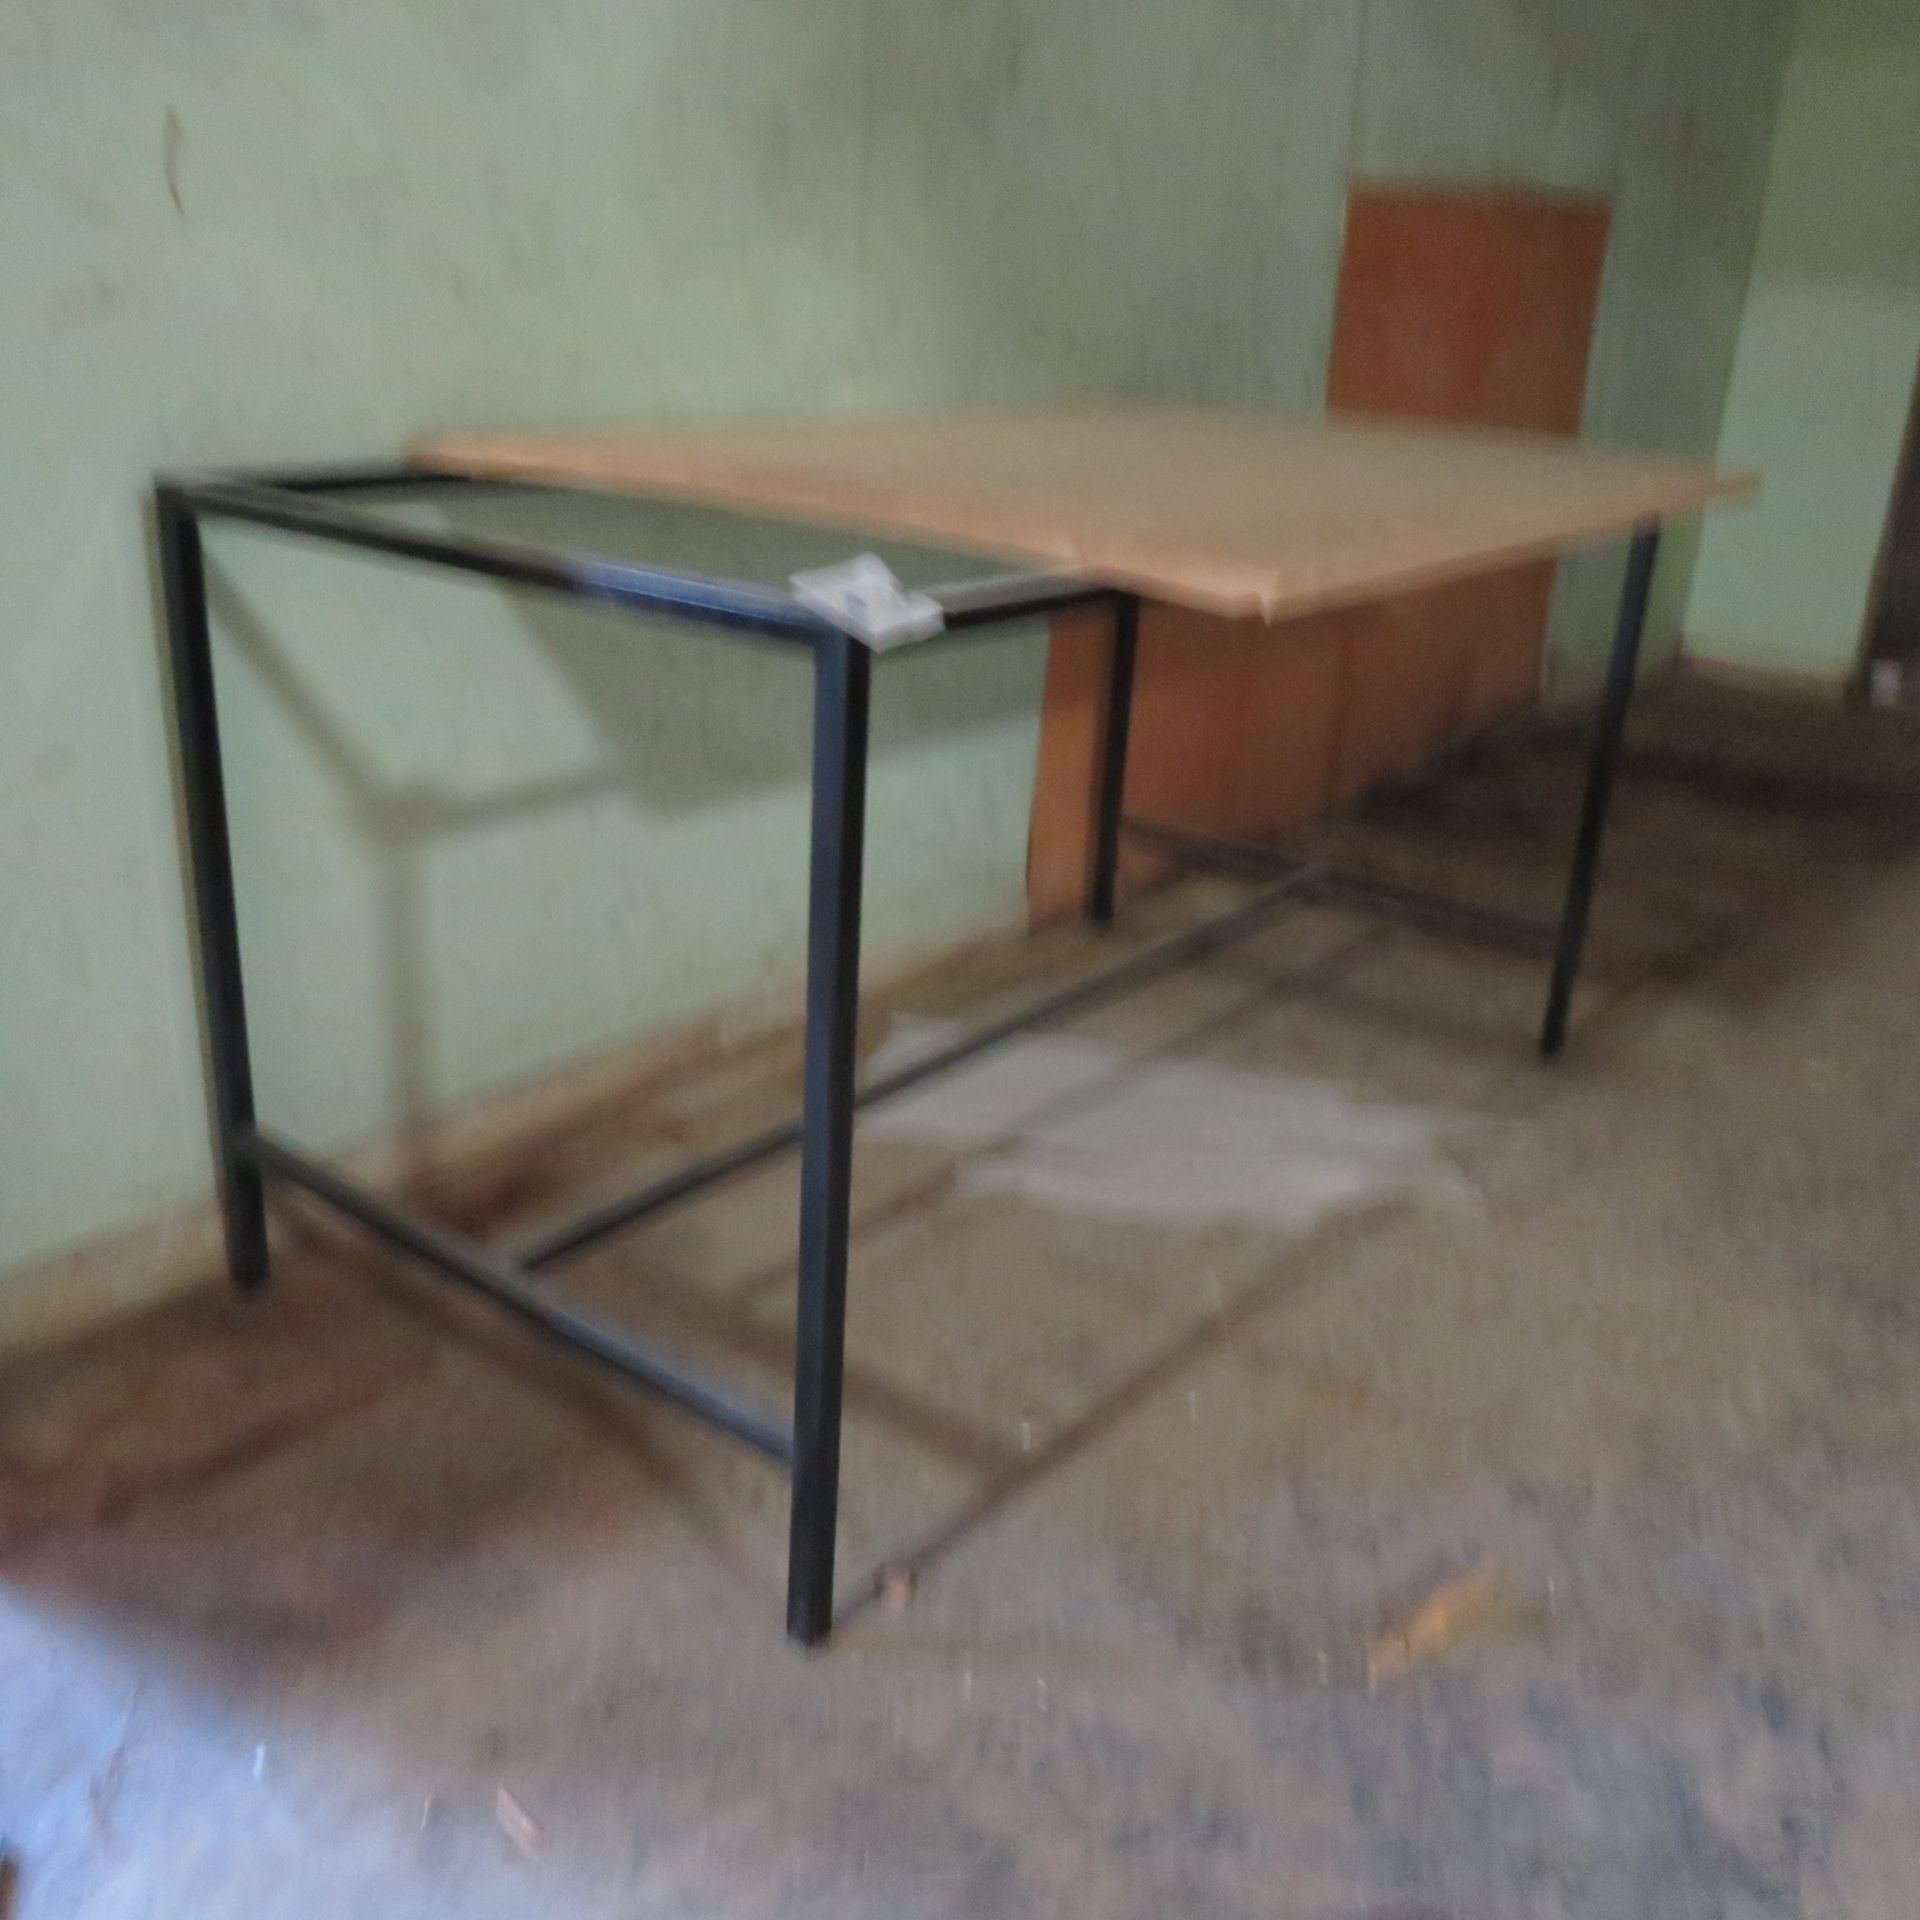 5' x 30" Steel Table Frame